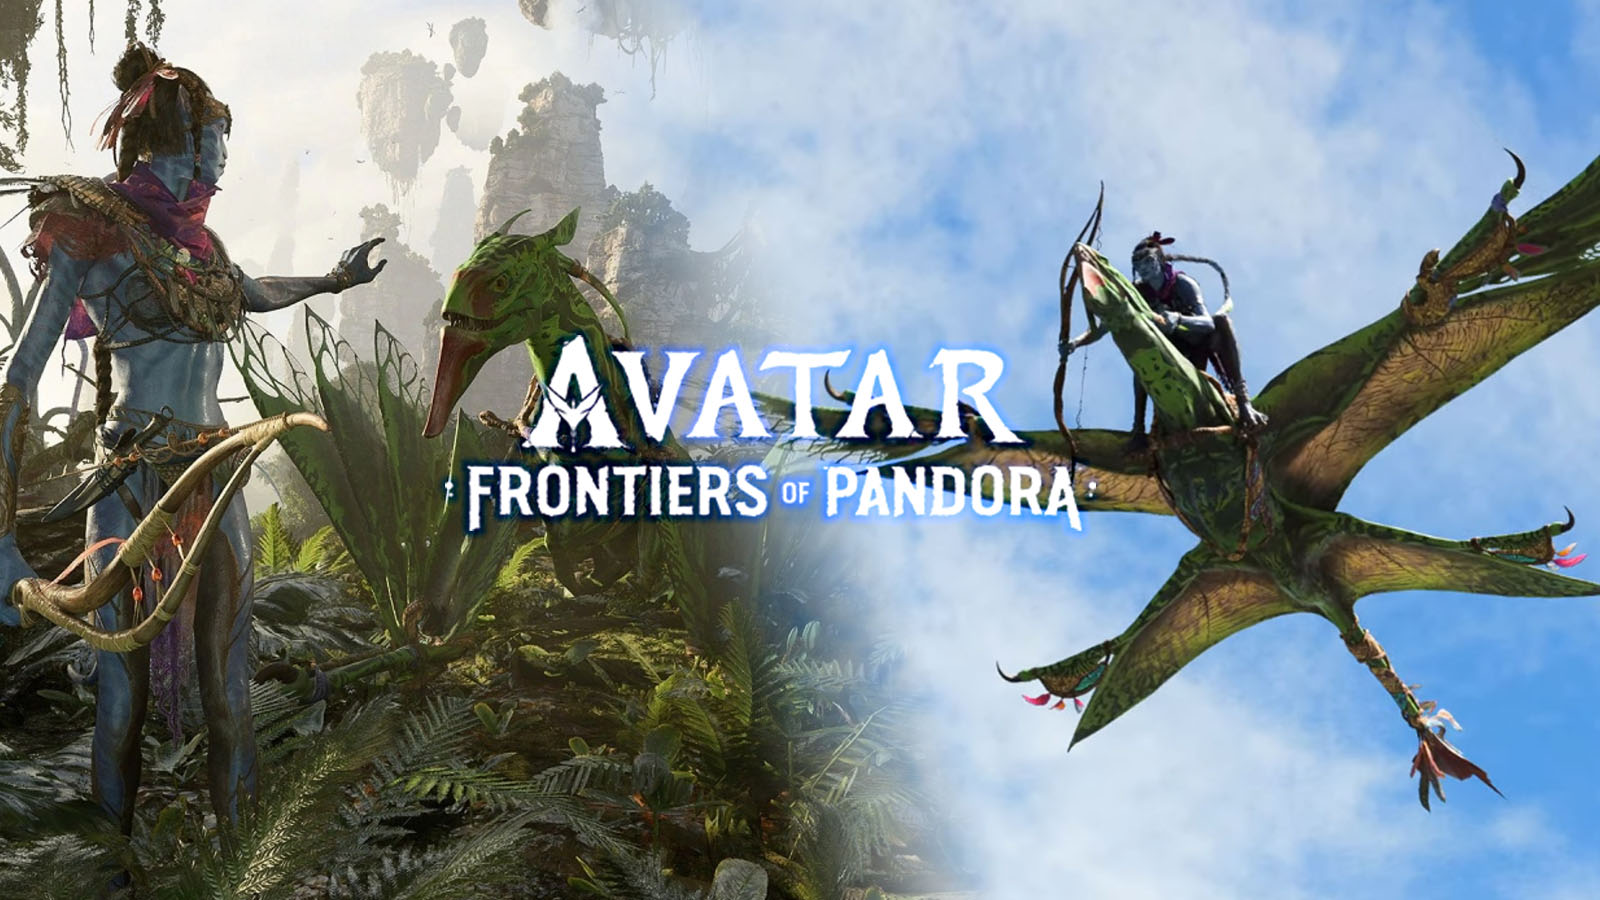 Video Game Avatar Frontiers of Pandora 8k Ultra HD Wallpaper